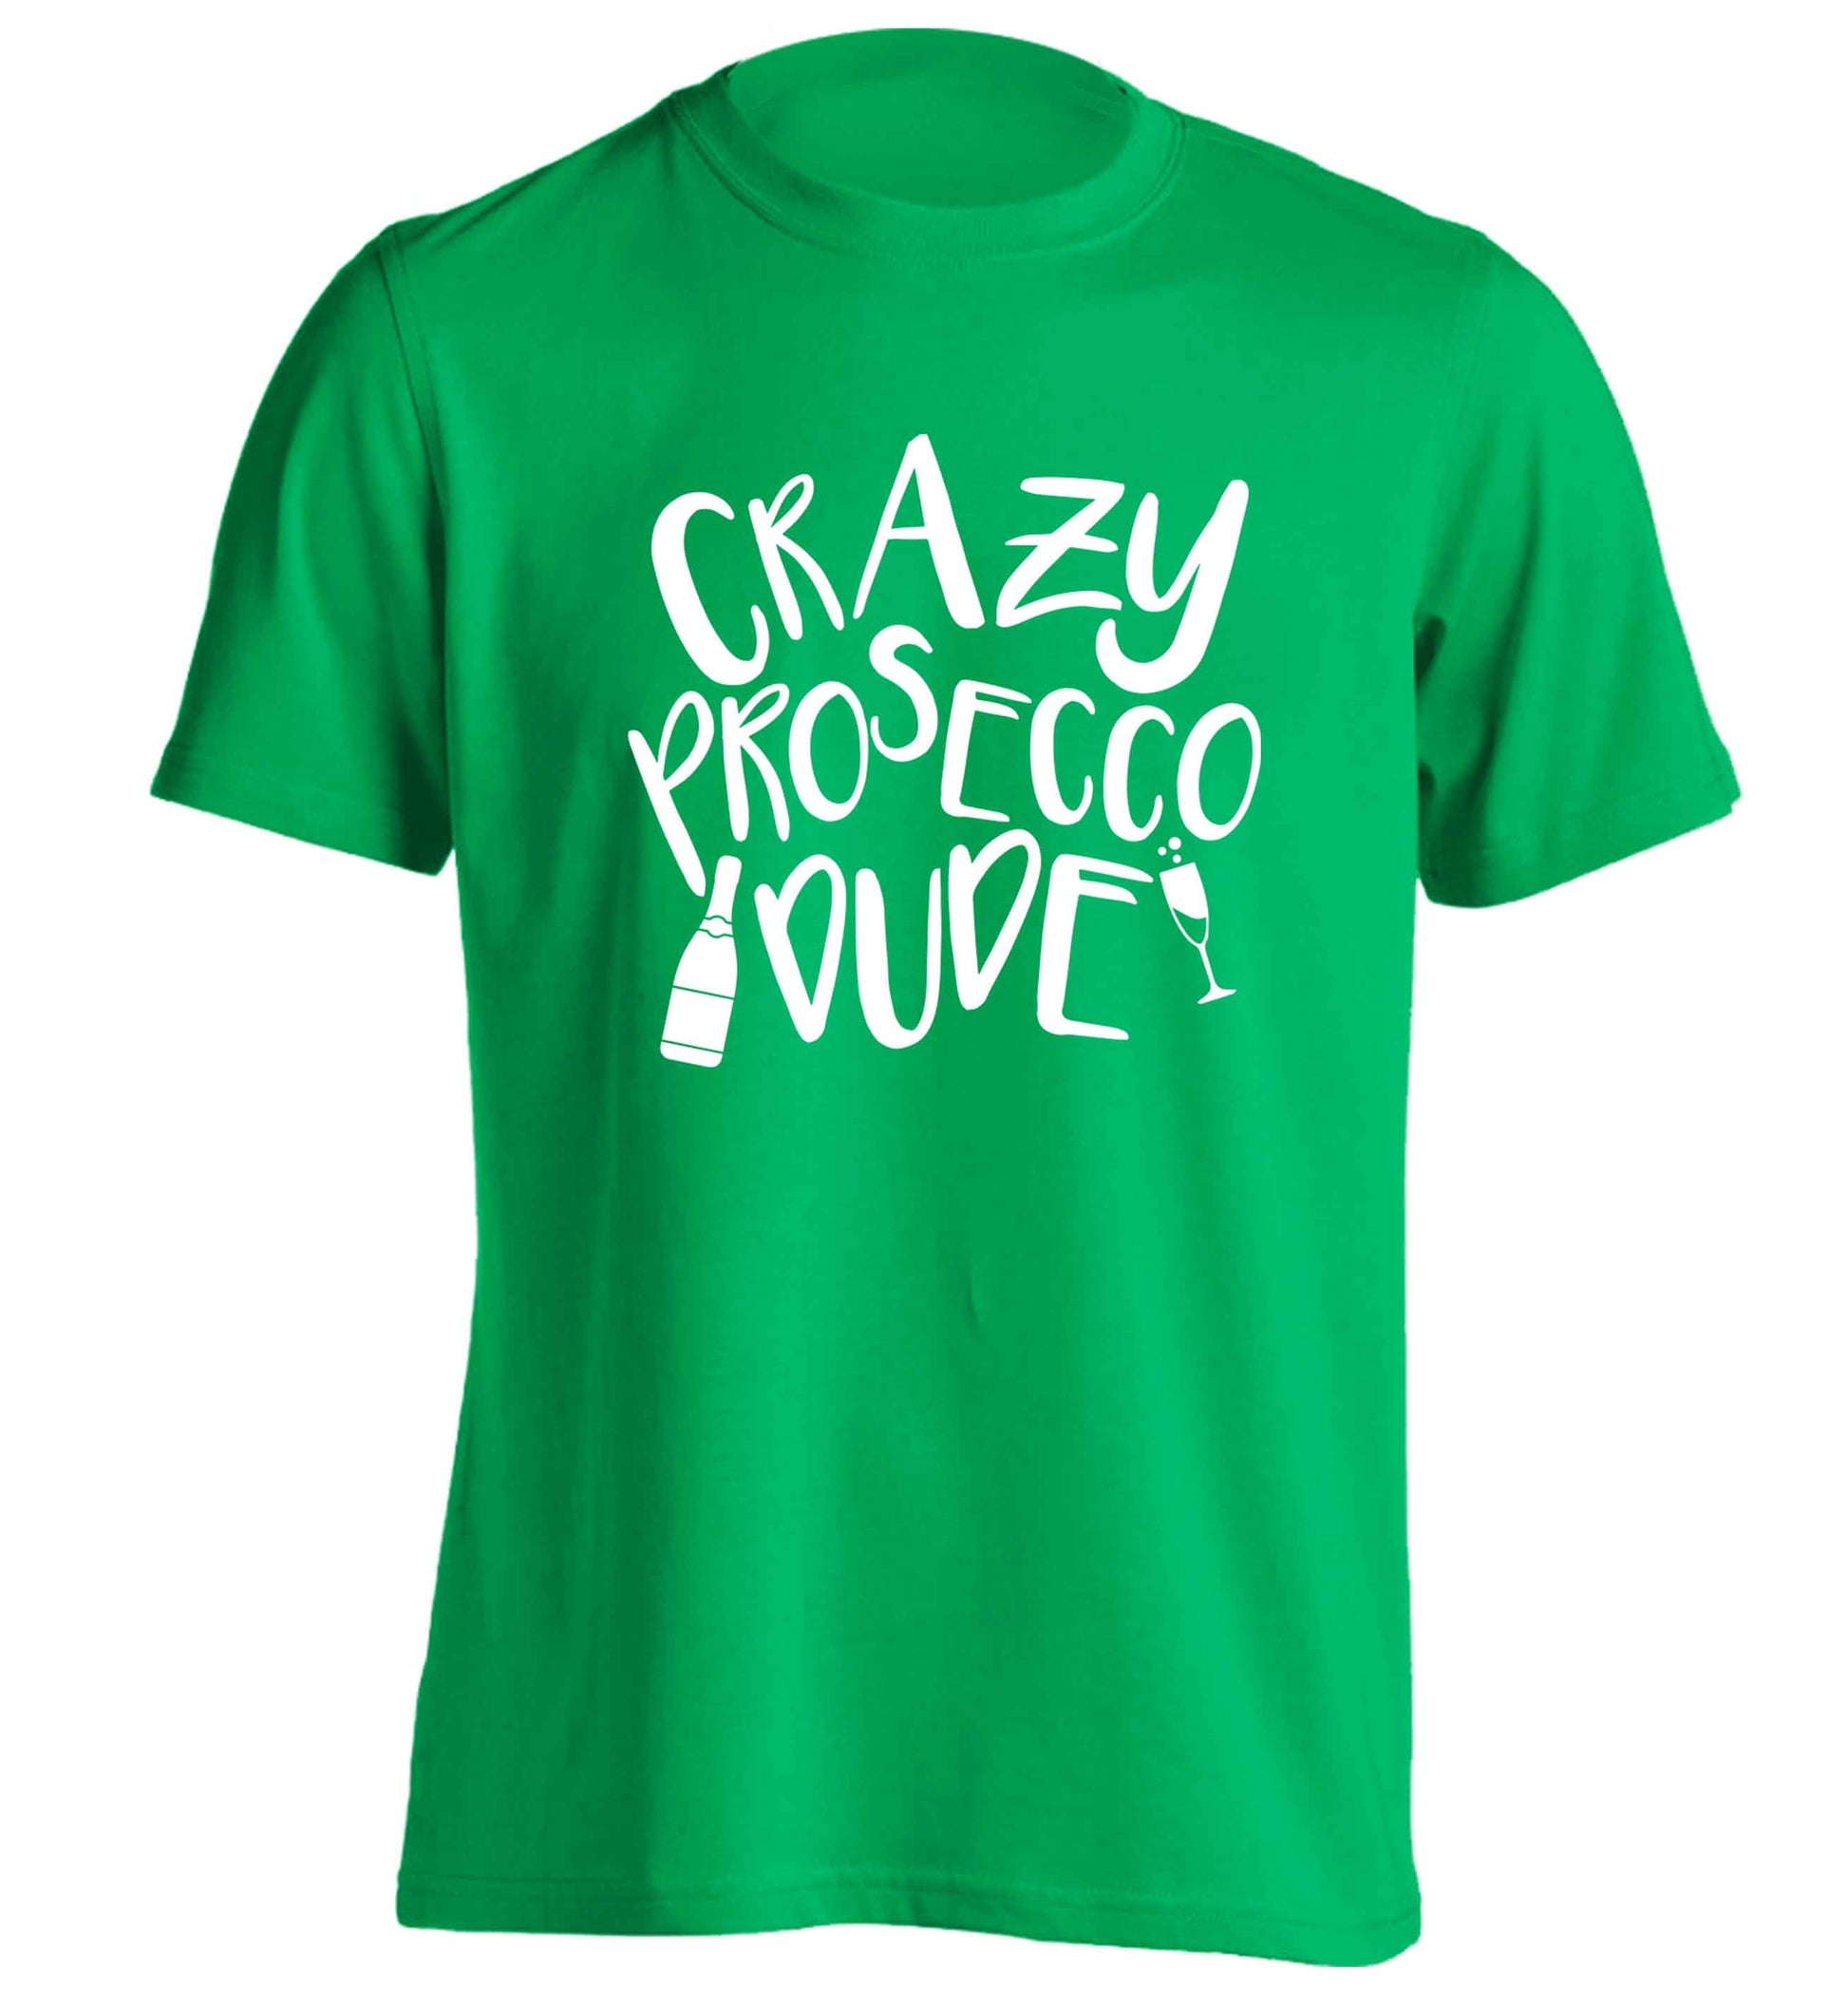 Crazy prosecco dude adults unisex green Tshirt 2XL